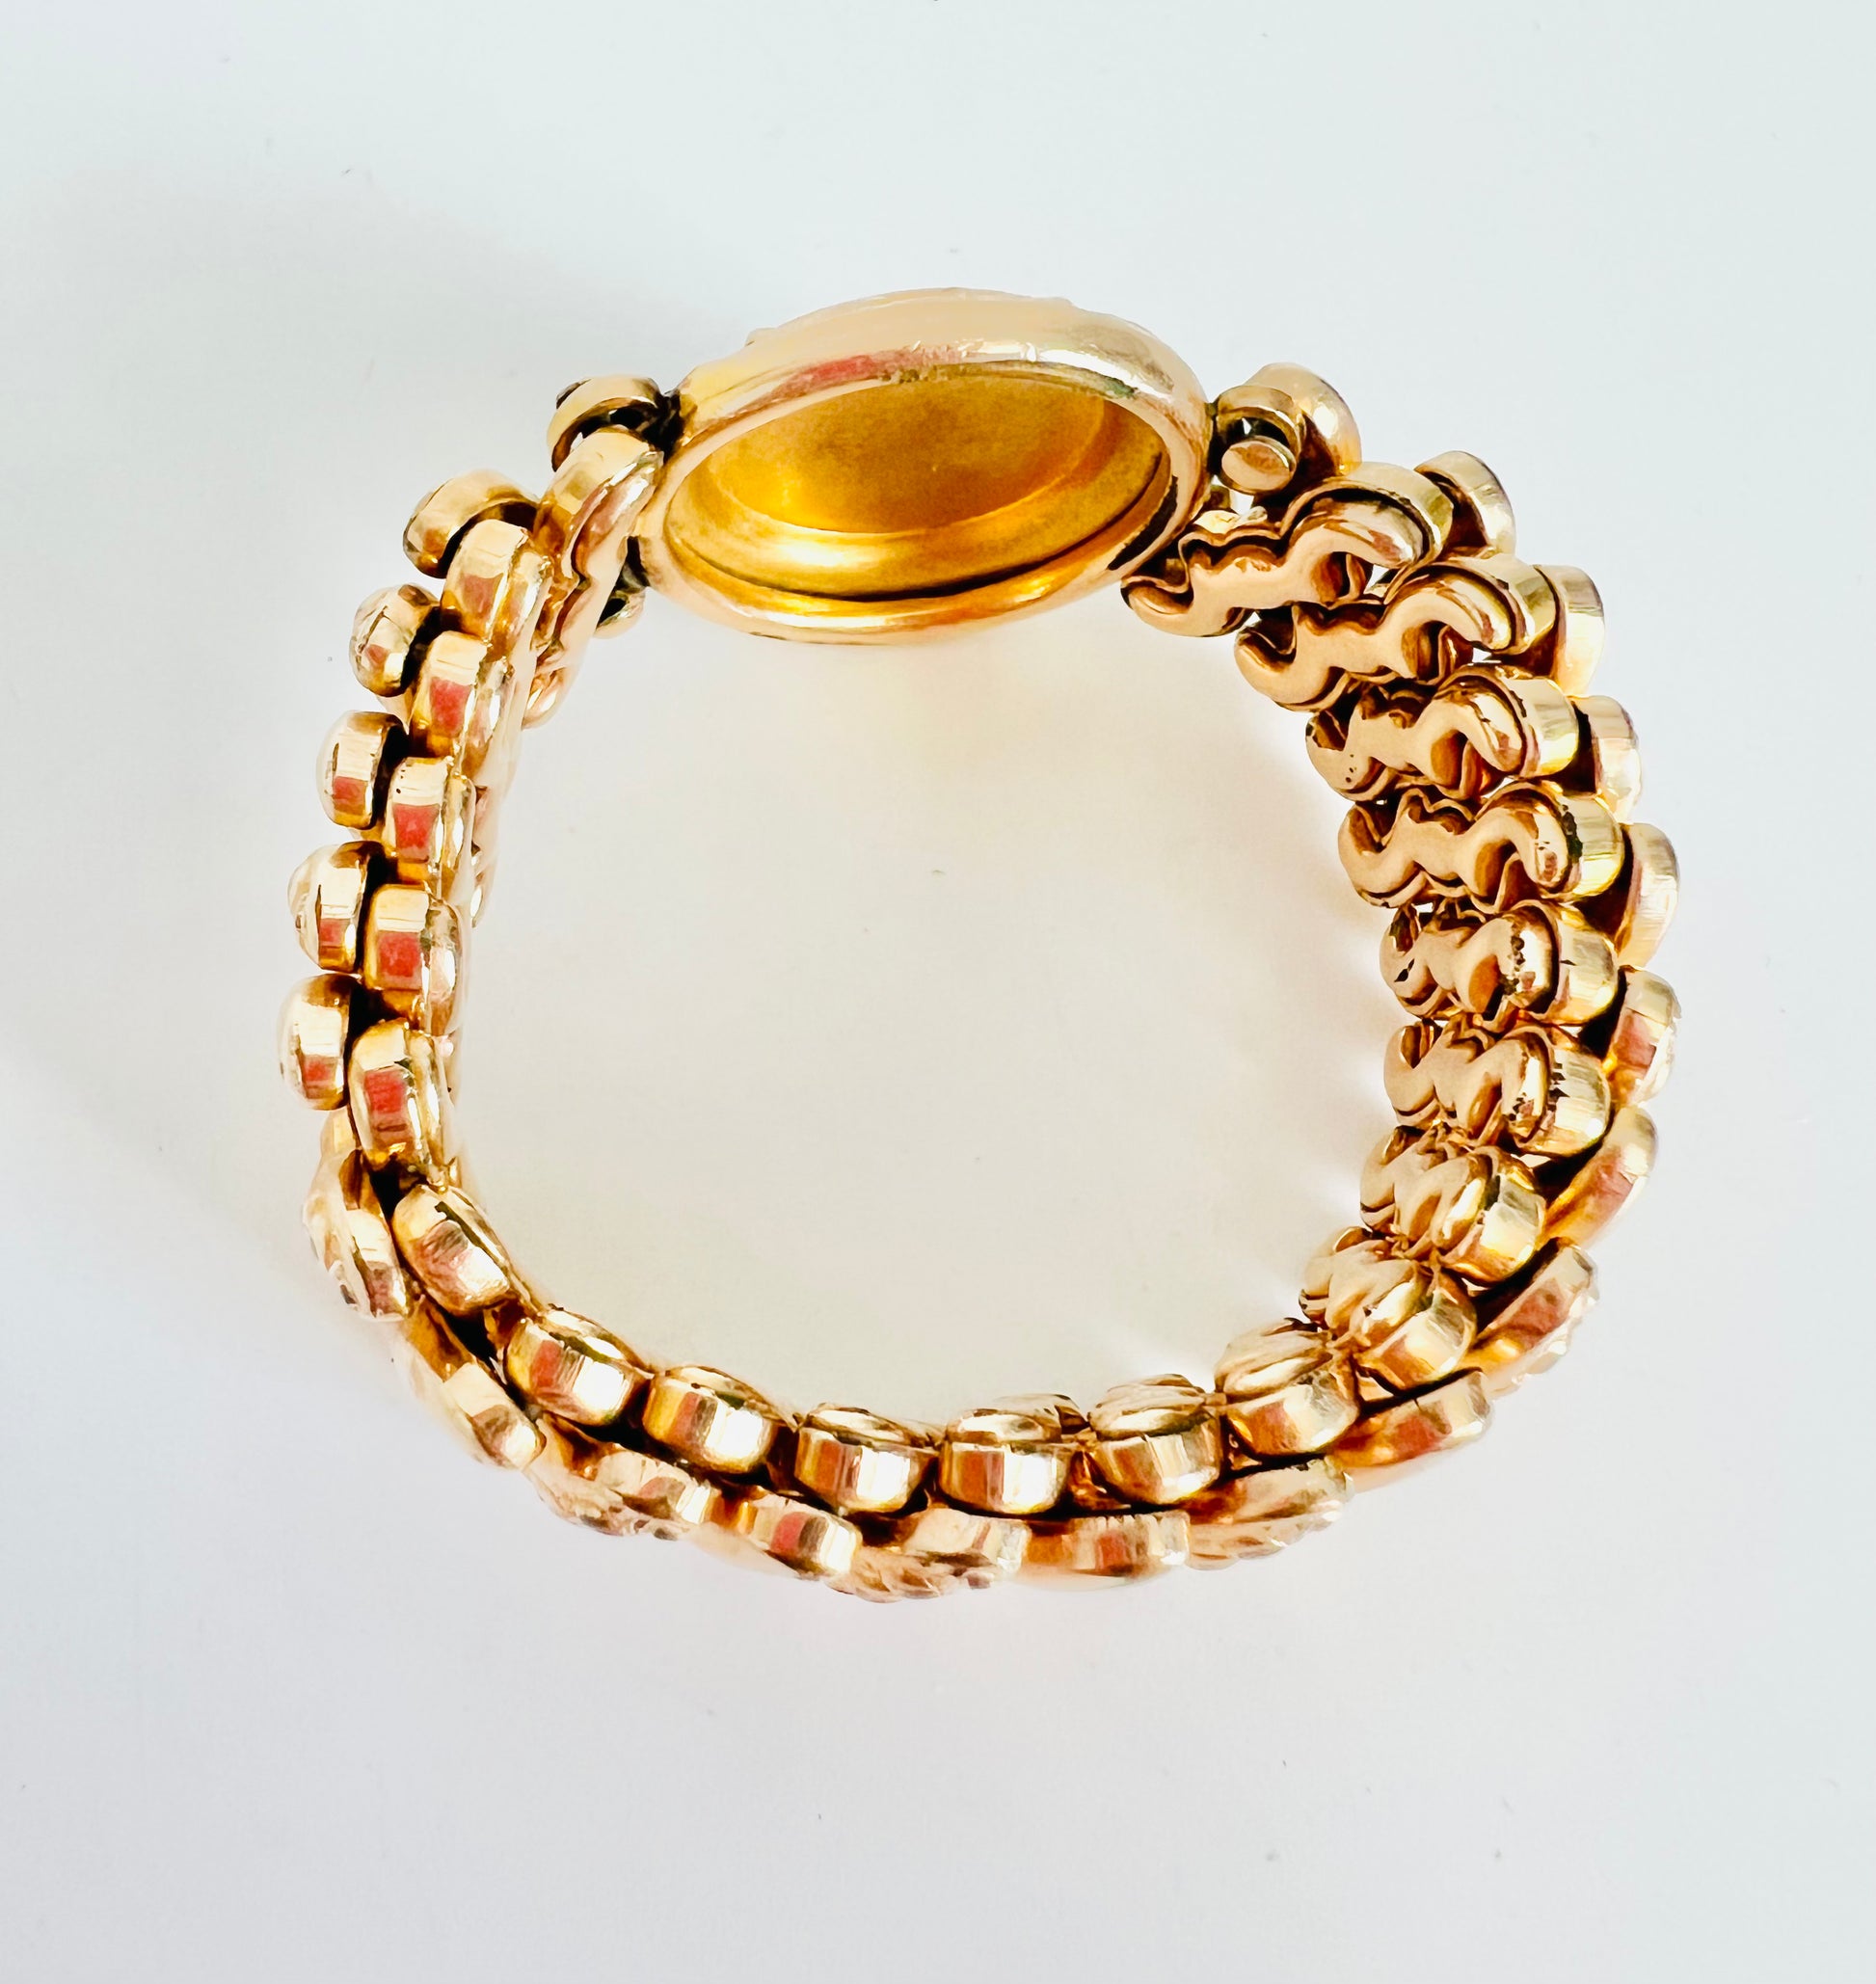 Best Deal for VILLCASE 40 Pairs Vintage Jewelry Vintage Bracelet